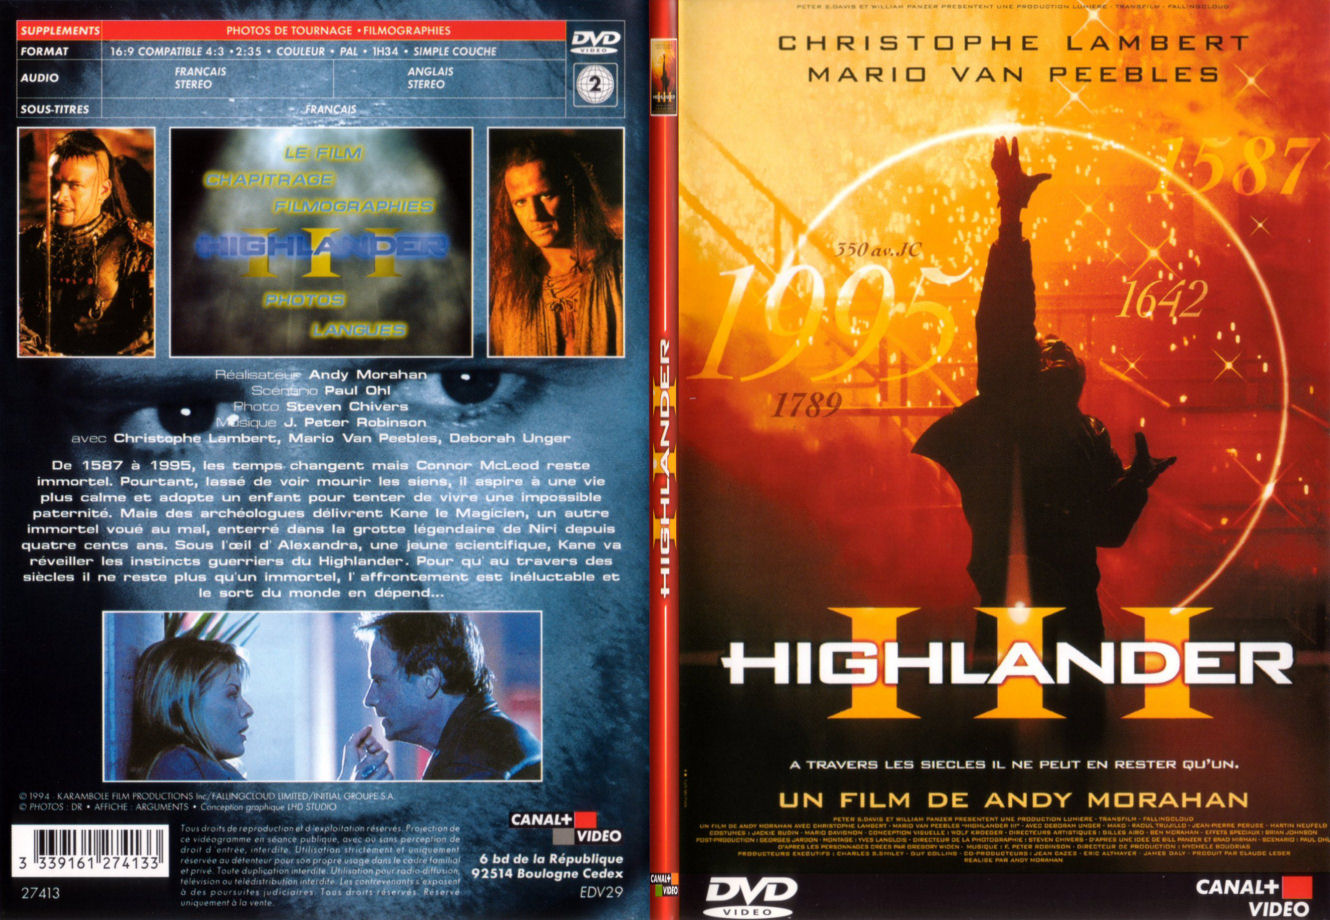 Jaquette DVD Highlander III - SLIM